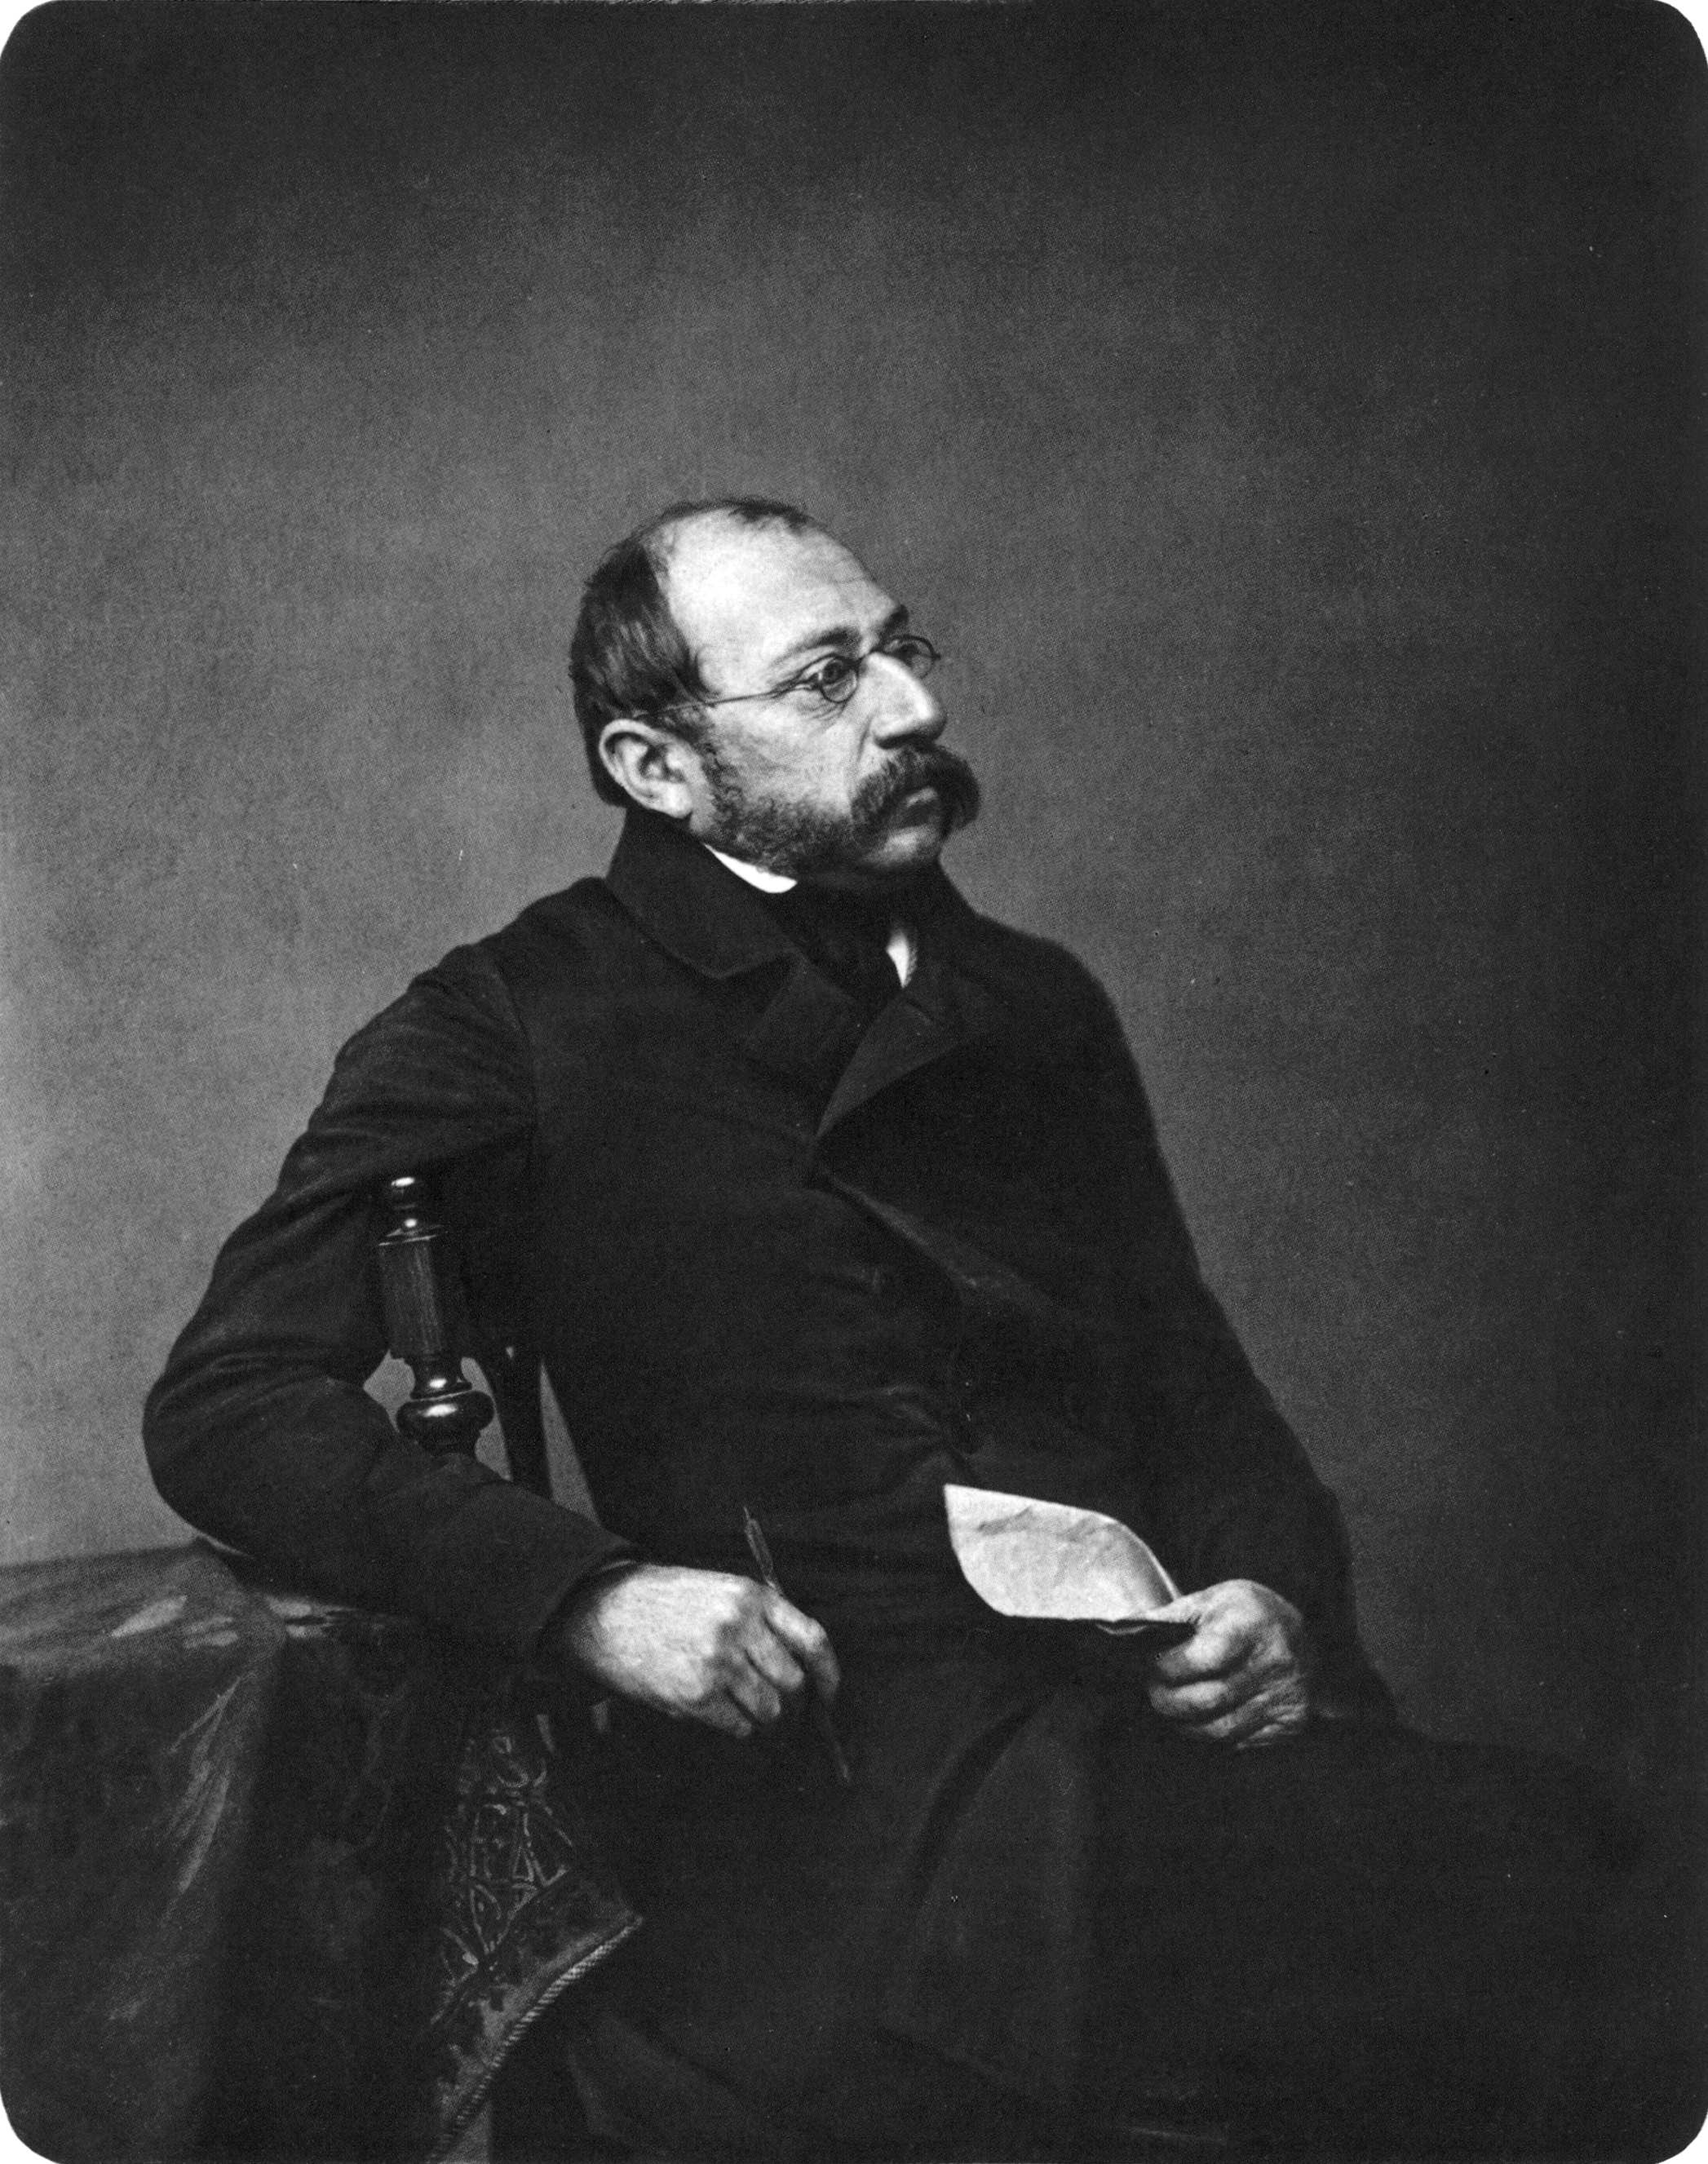 Carl Spitzweg in a photograph taken c. 1860